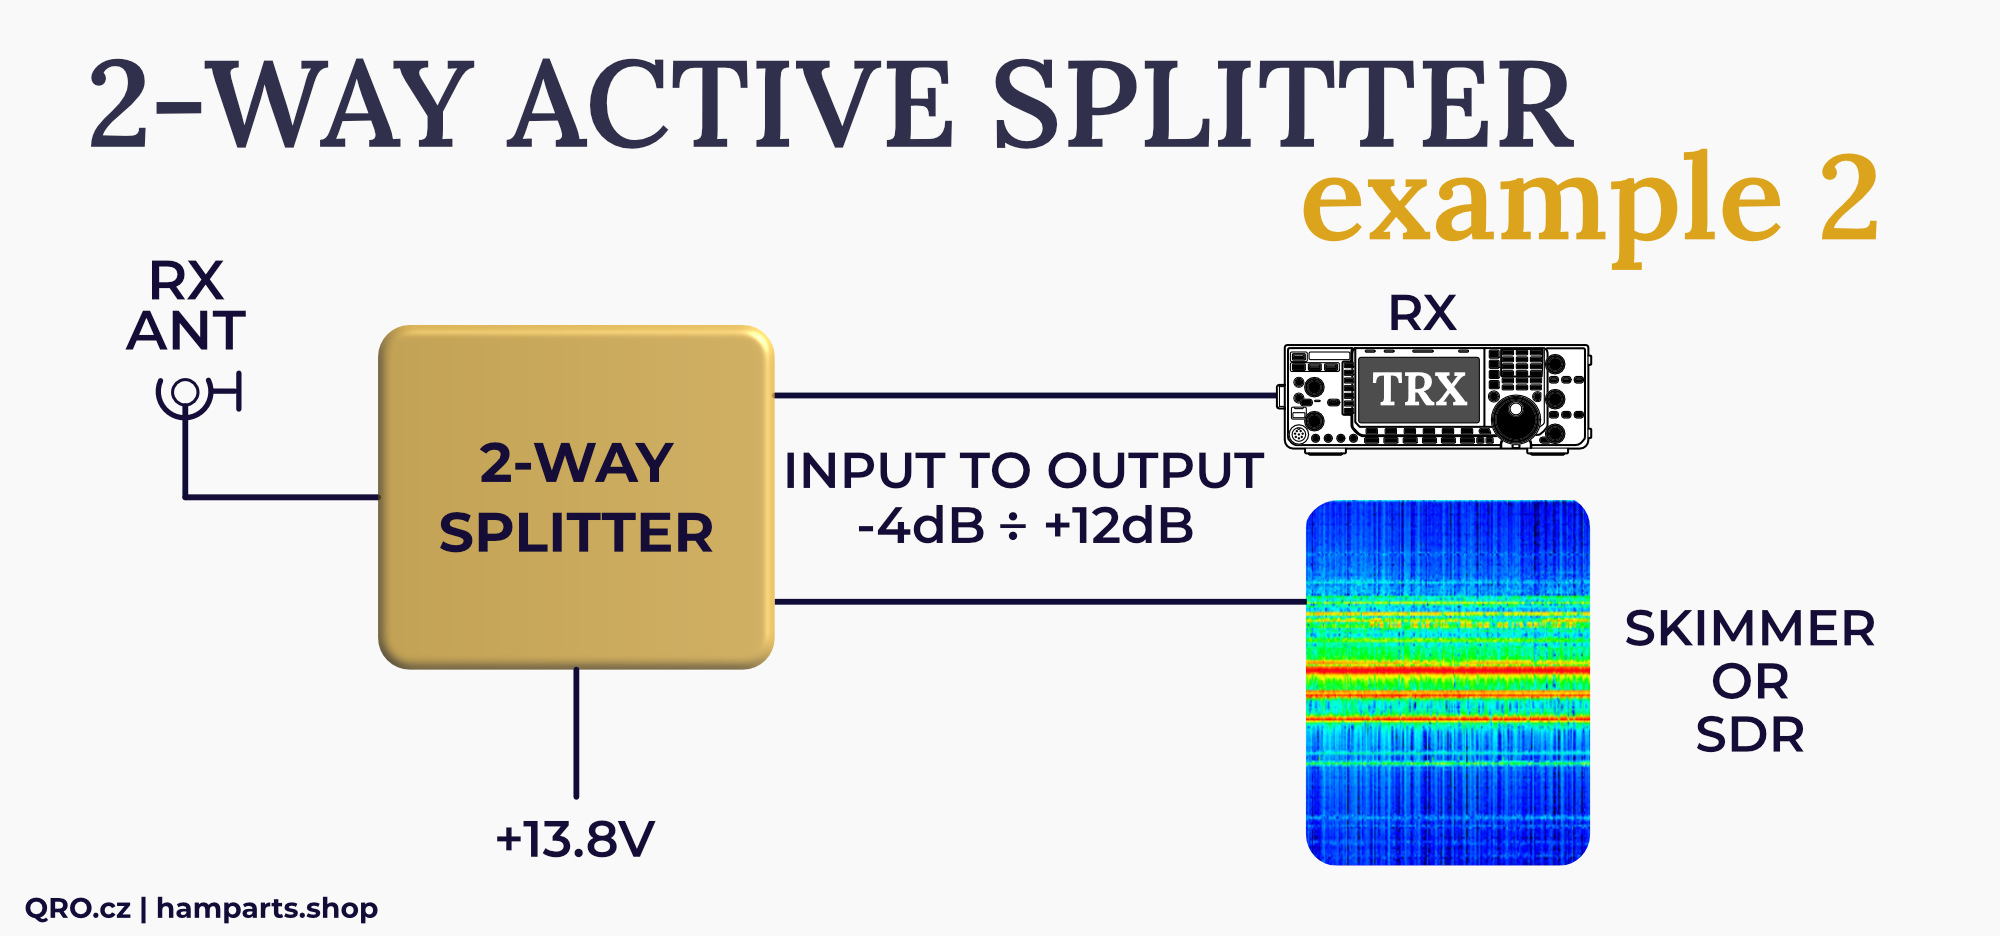 2-way active splitter by qro.cz hamparts.shop